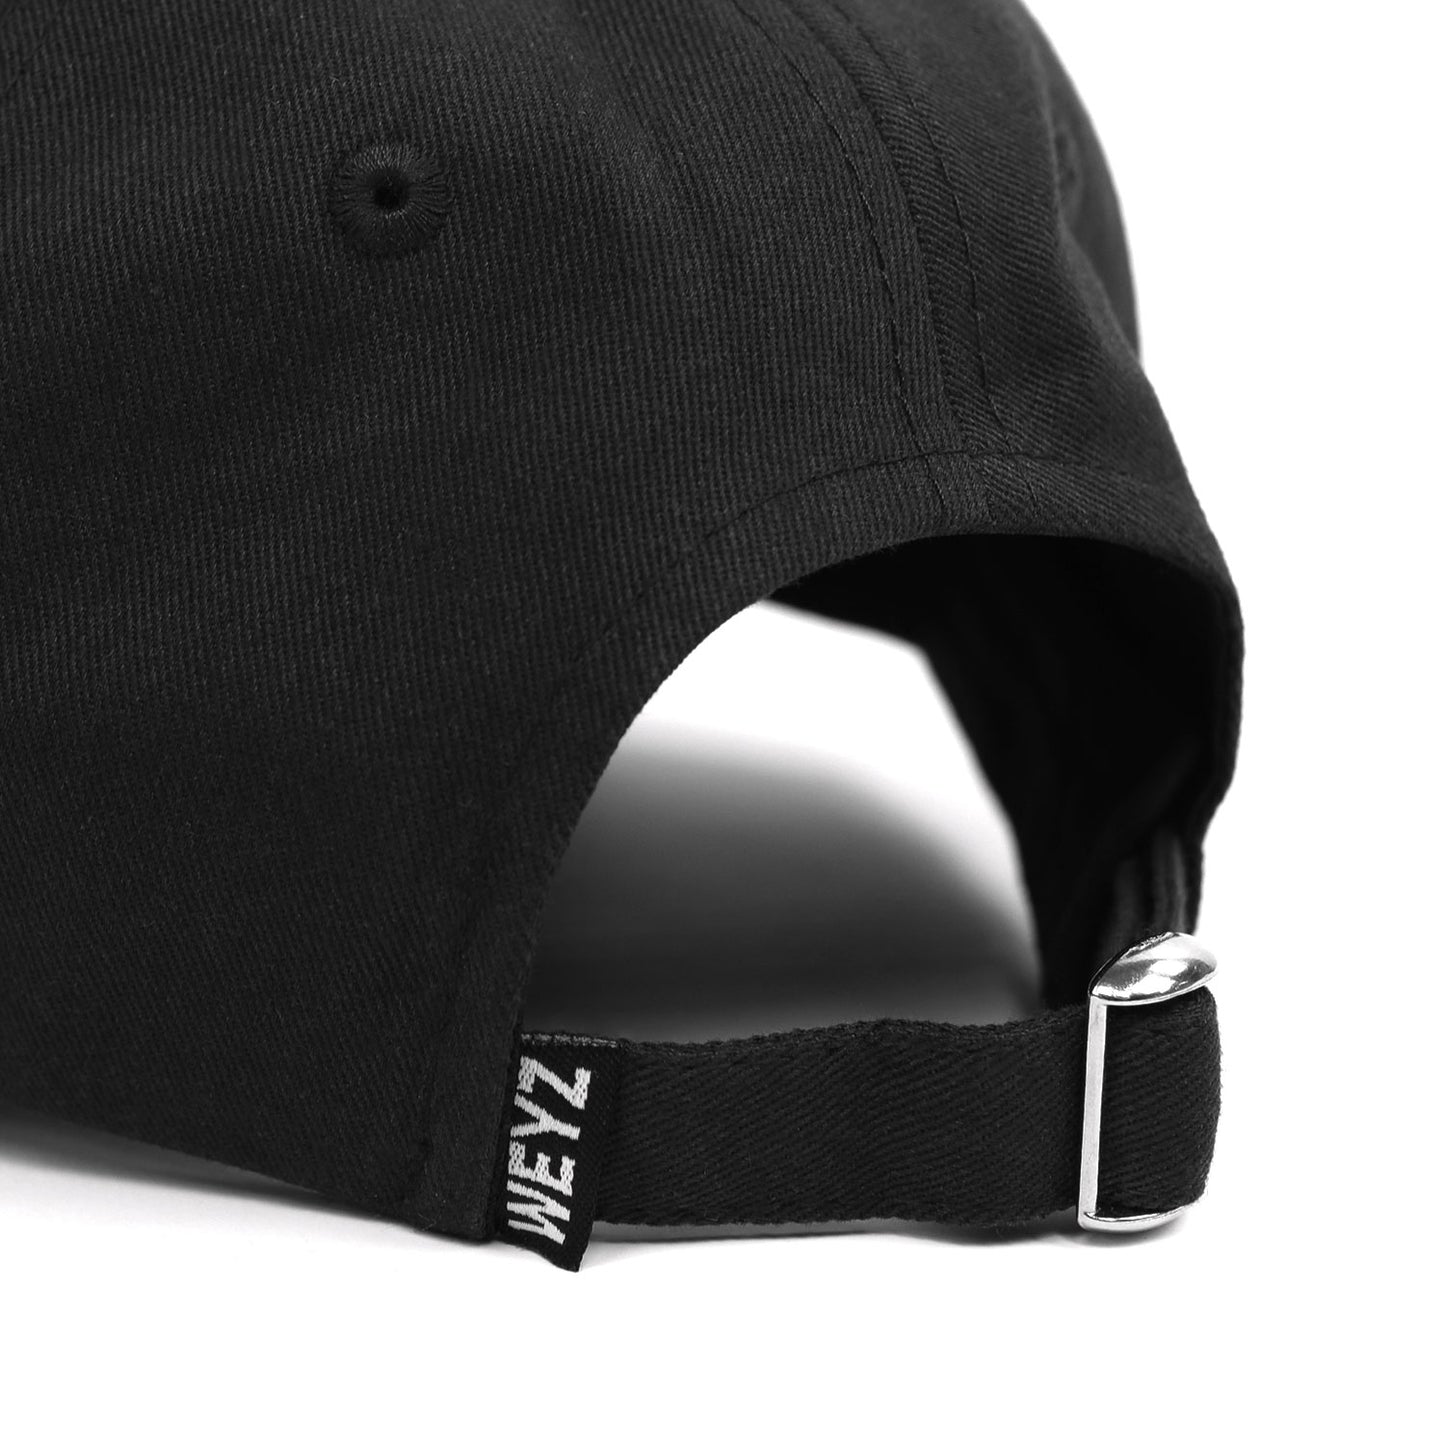 Baseball caps Weyz signature black cotton adjustable strap